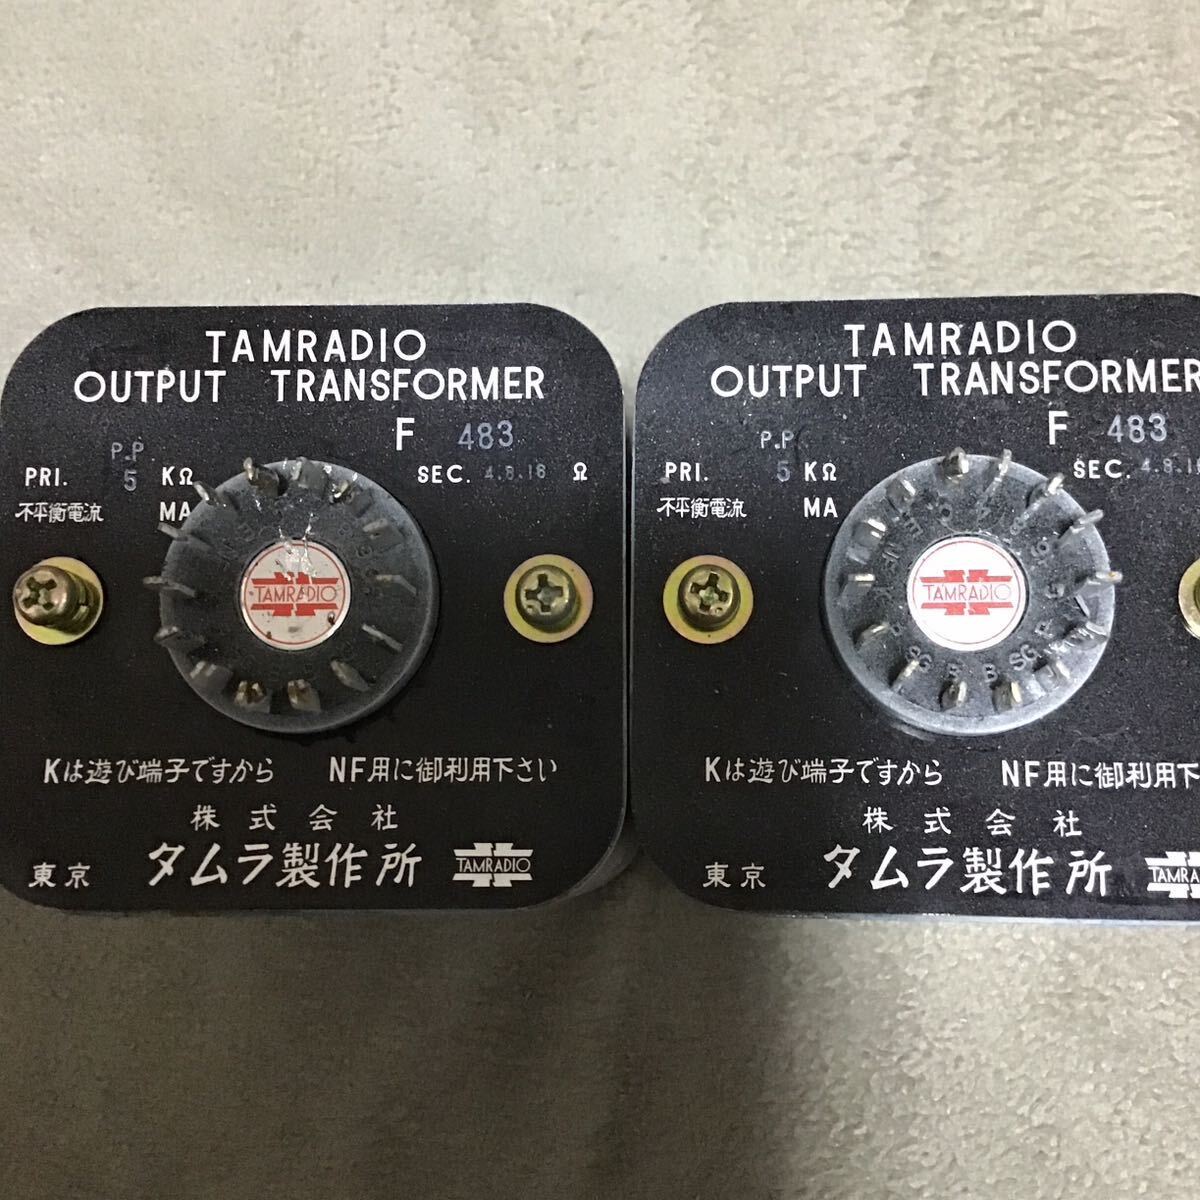  Tamura made output trance F483 (5kΩ PP for ) 2 piece set 